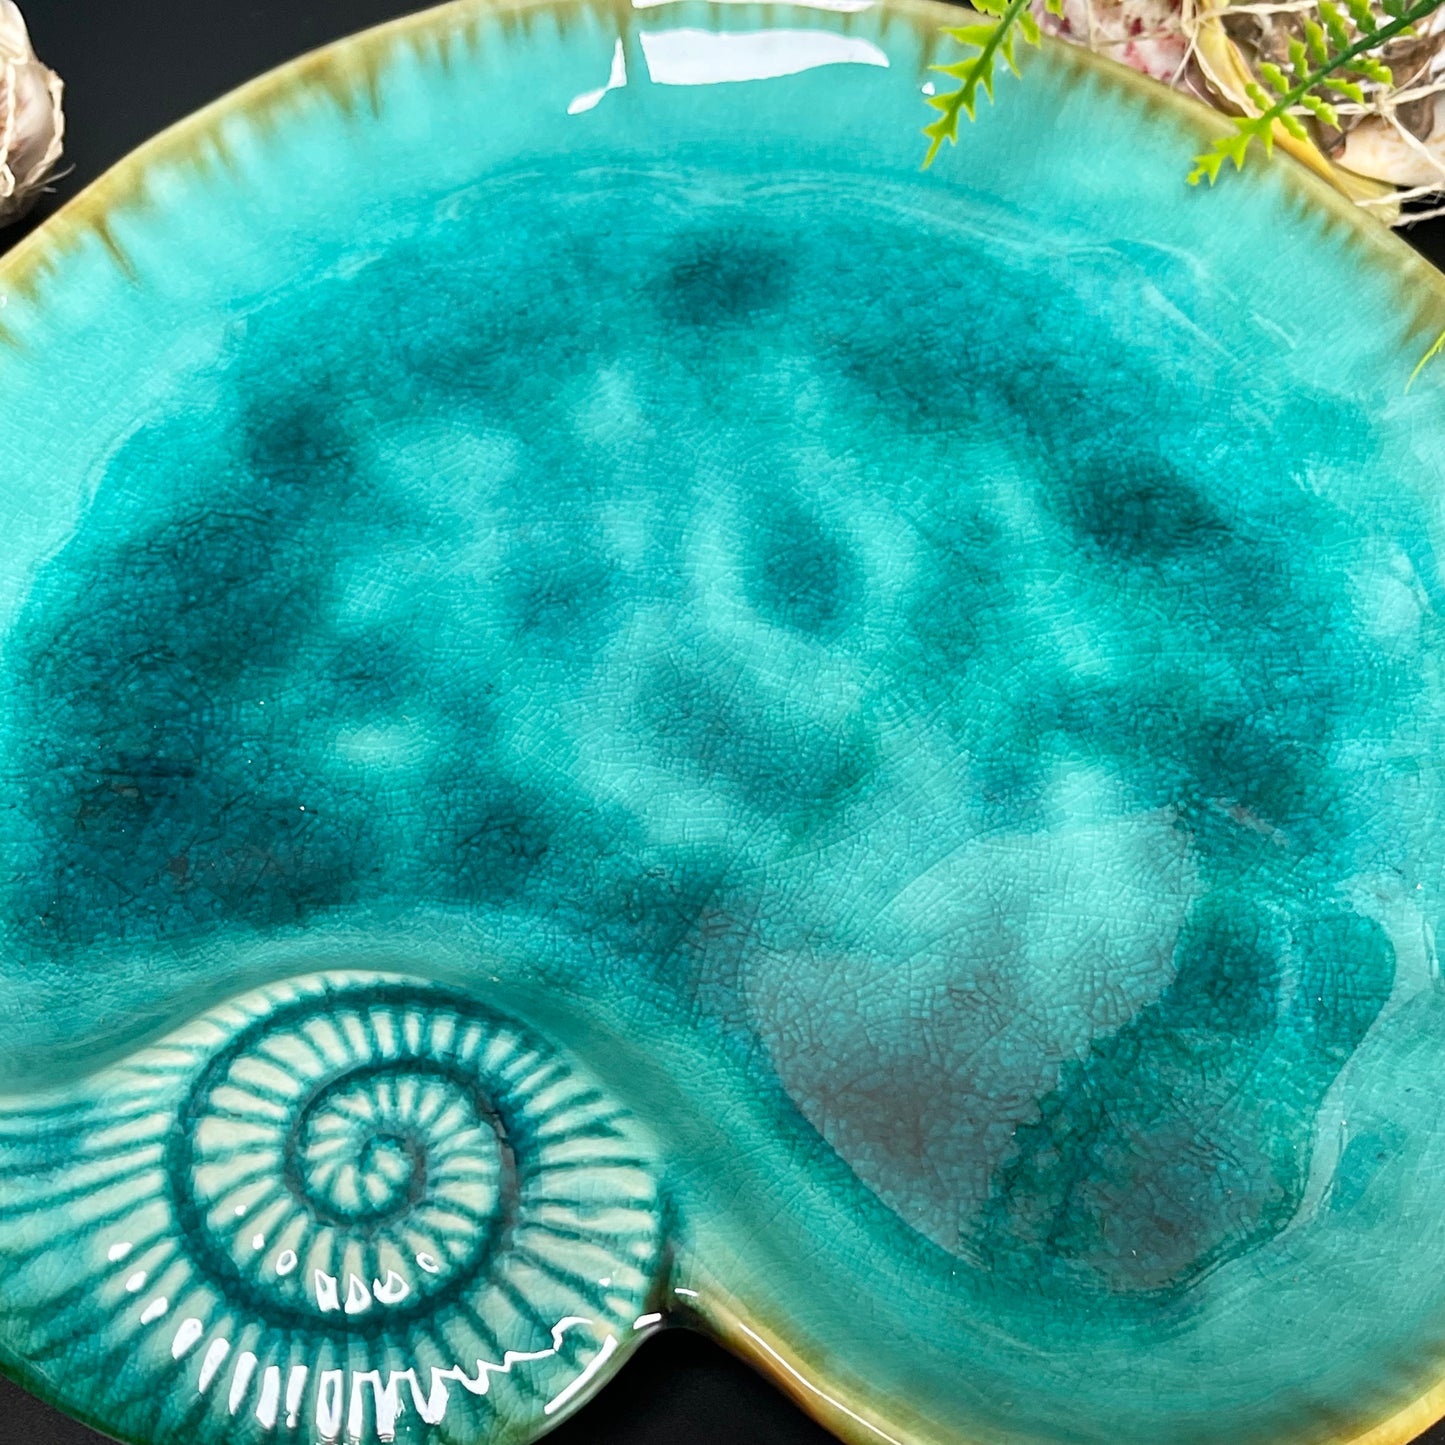 Keramik-Schmuckschale mit blaugrüner Muschel